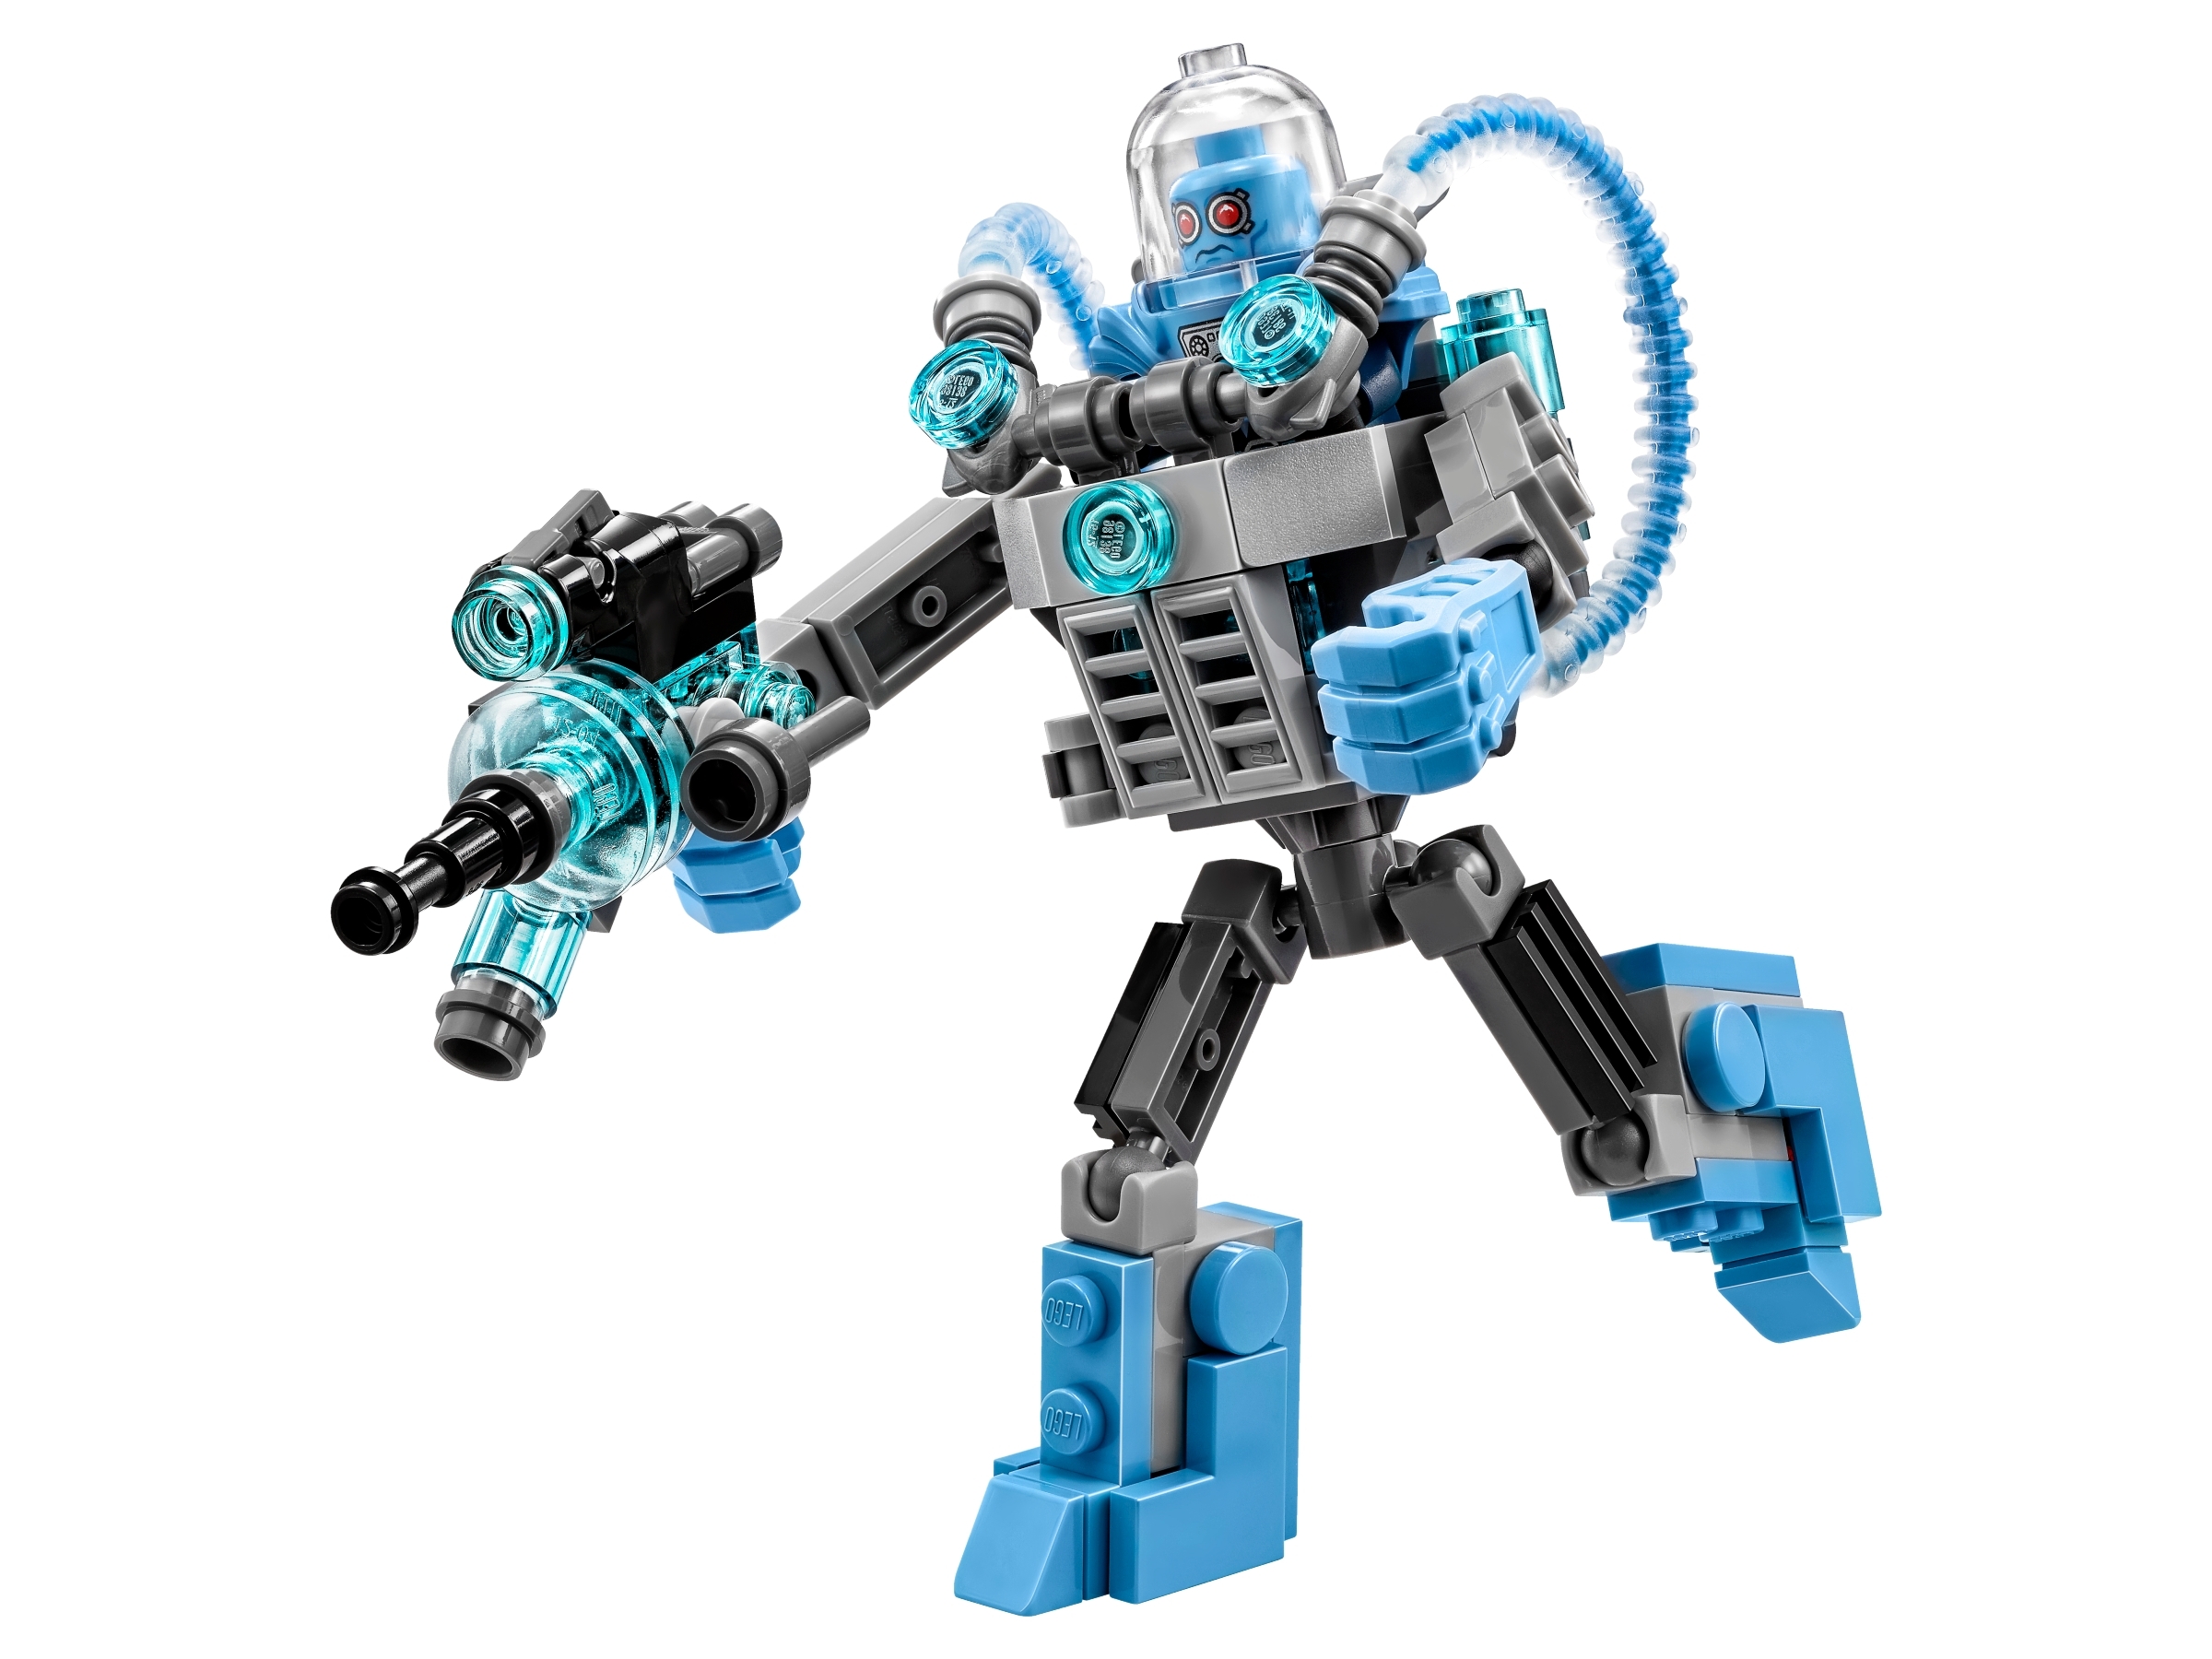 for sale online LEGO Batman Movie Mr 70901 Freeze Ice Attack 2016